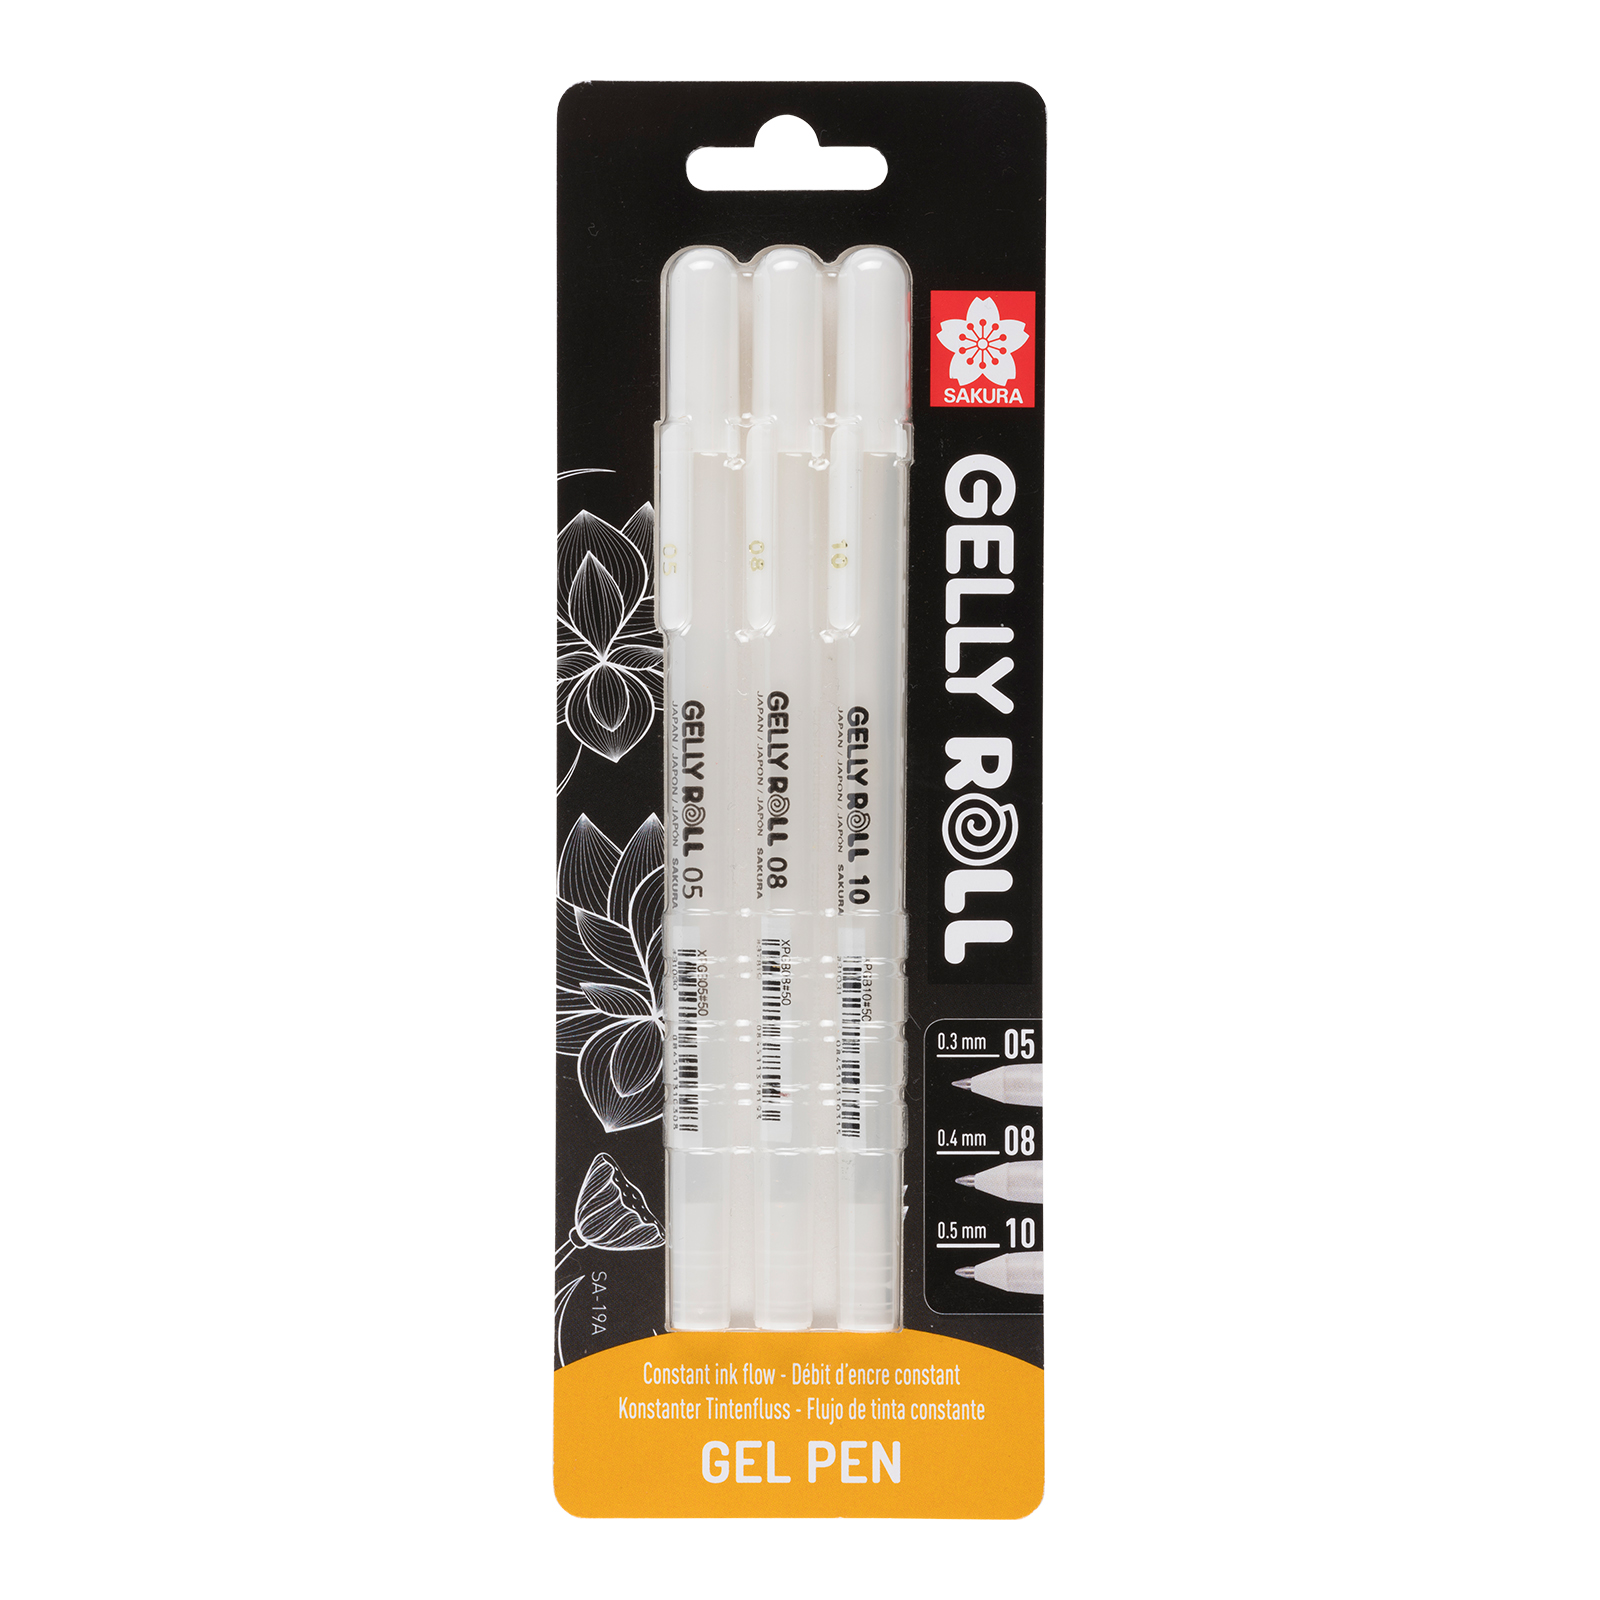 Creative Inspirations Gel Pen Sets